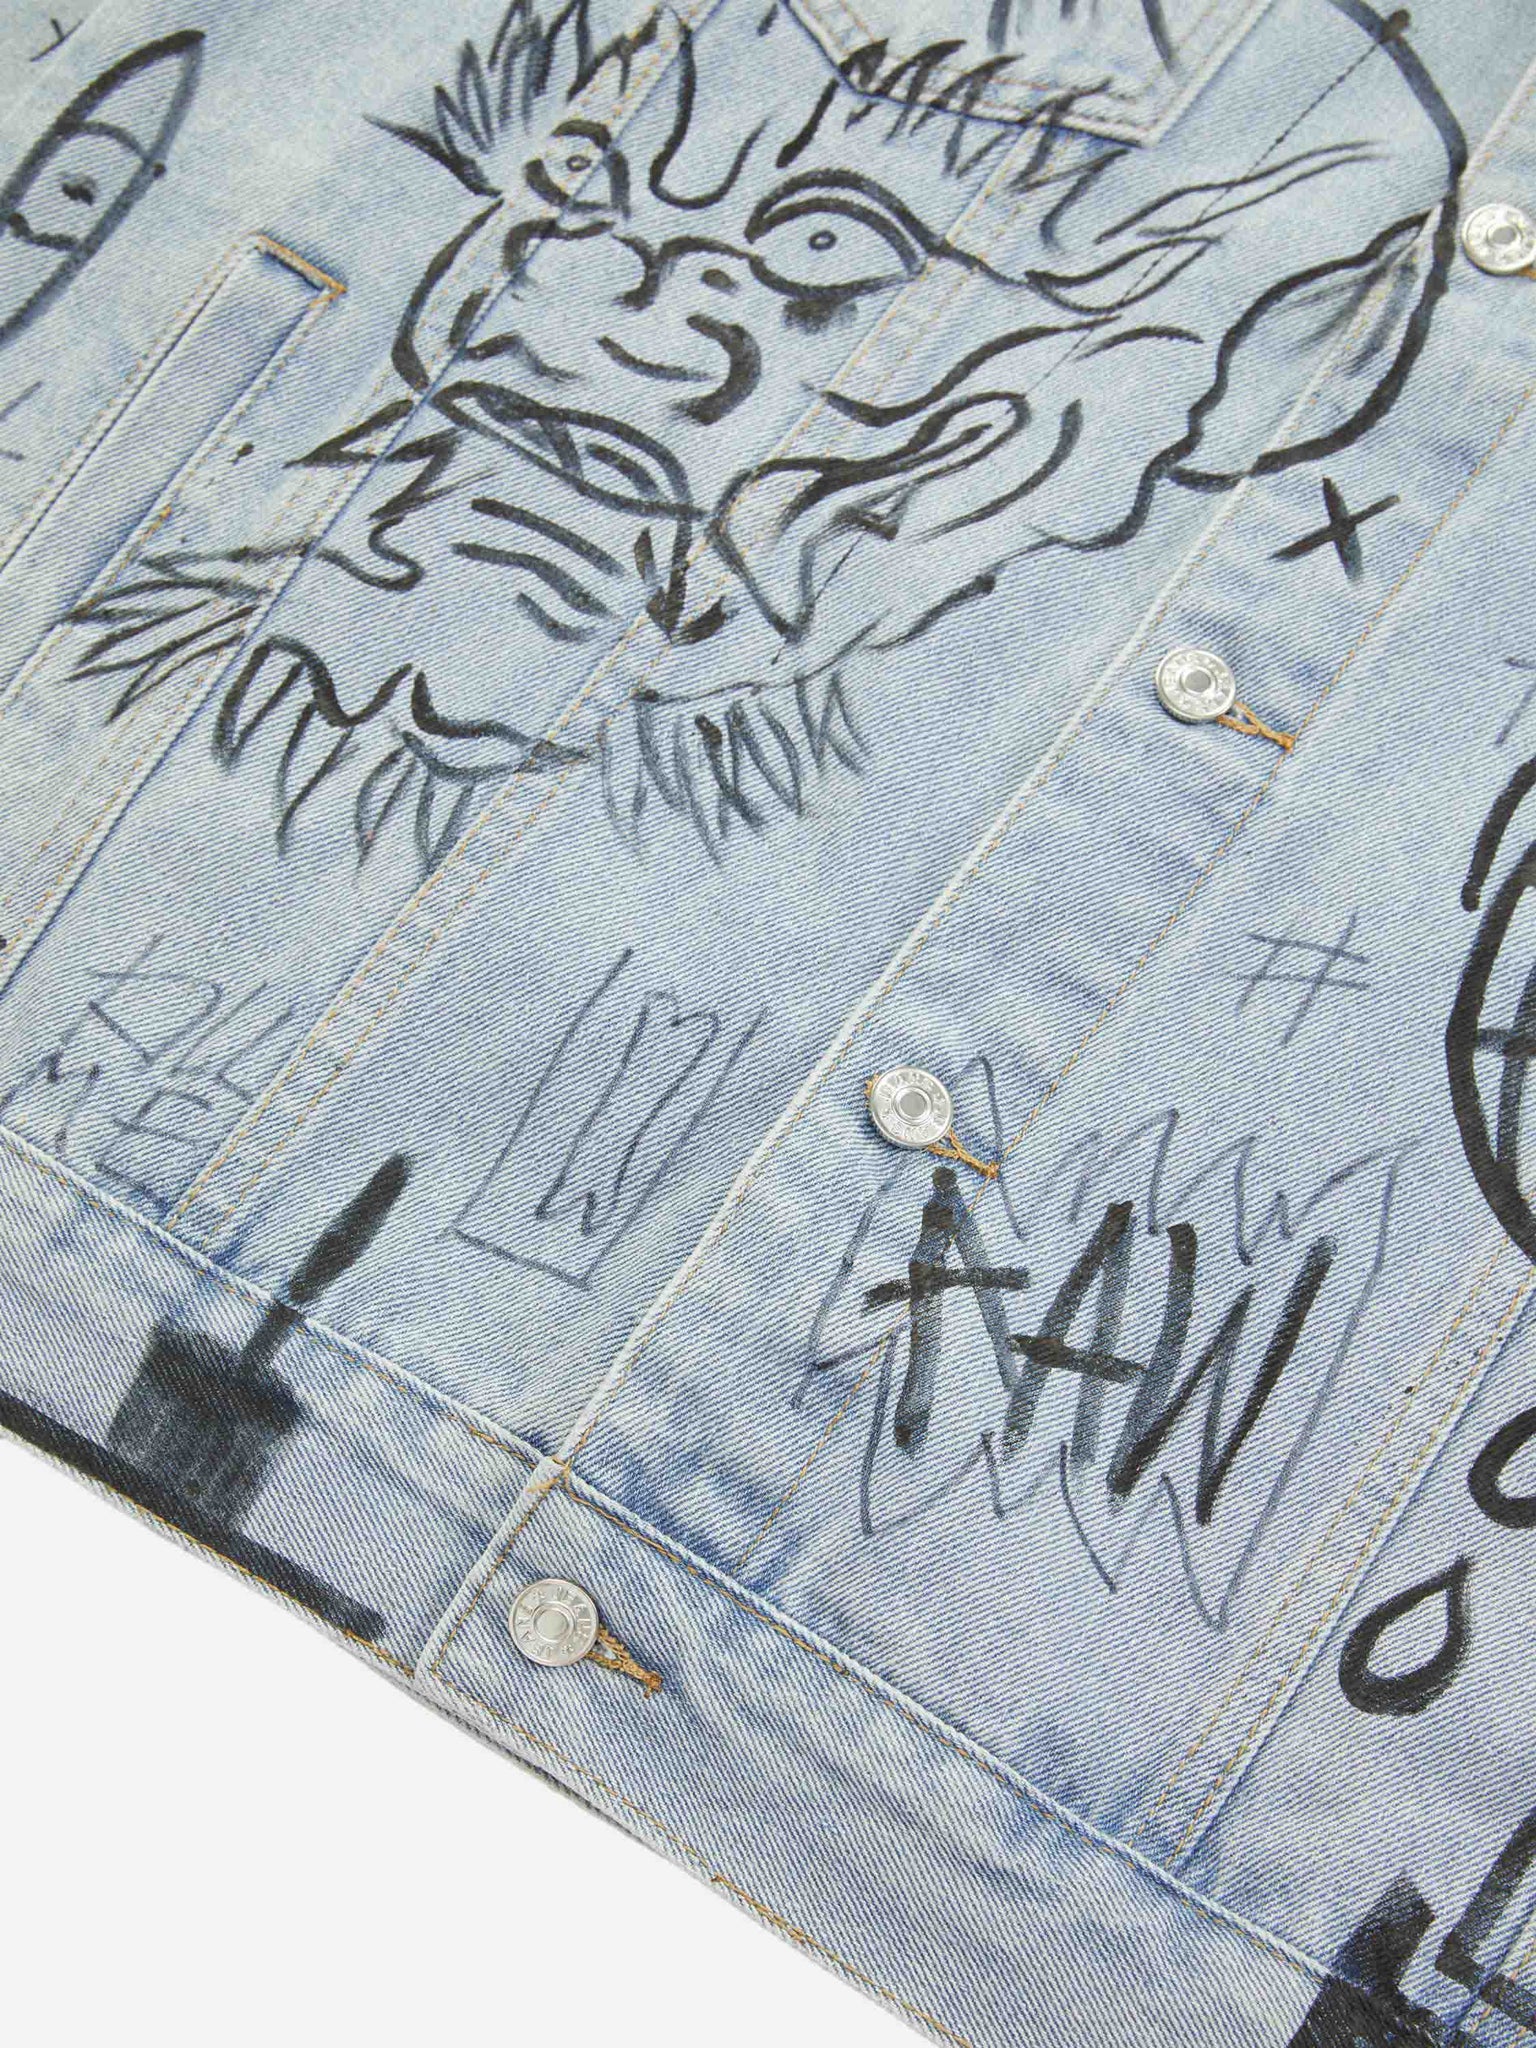 American High Street Graffiti Hand Painted Washed Denim Jacket - 1996